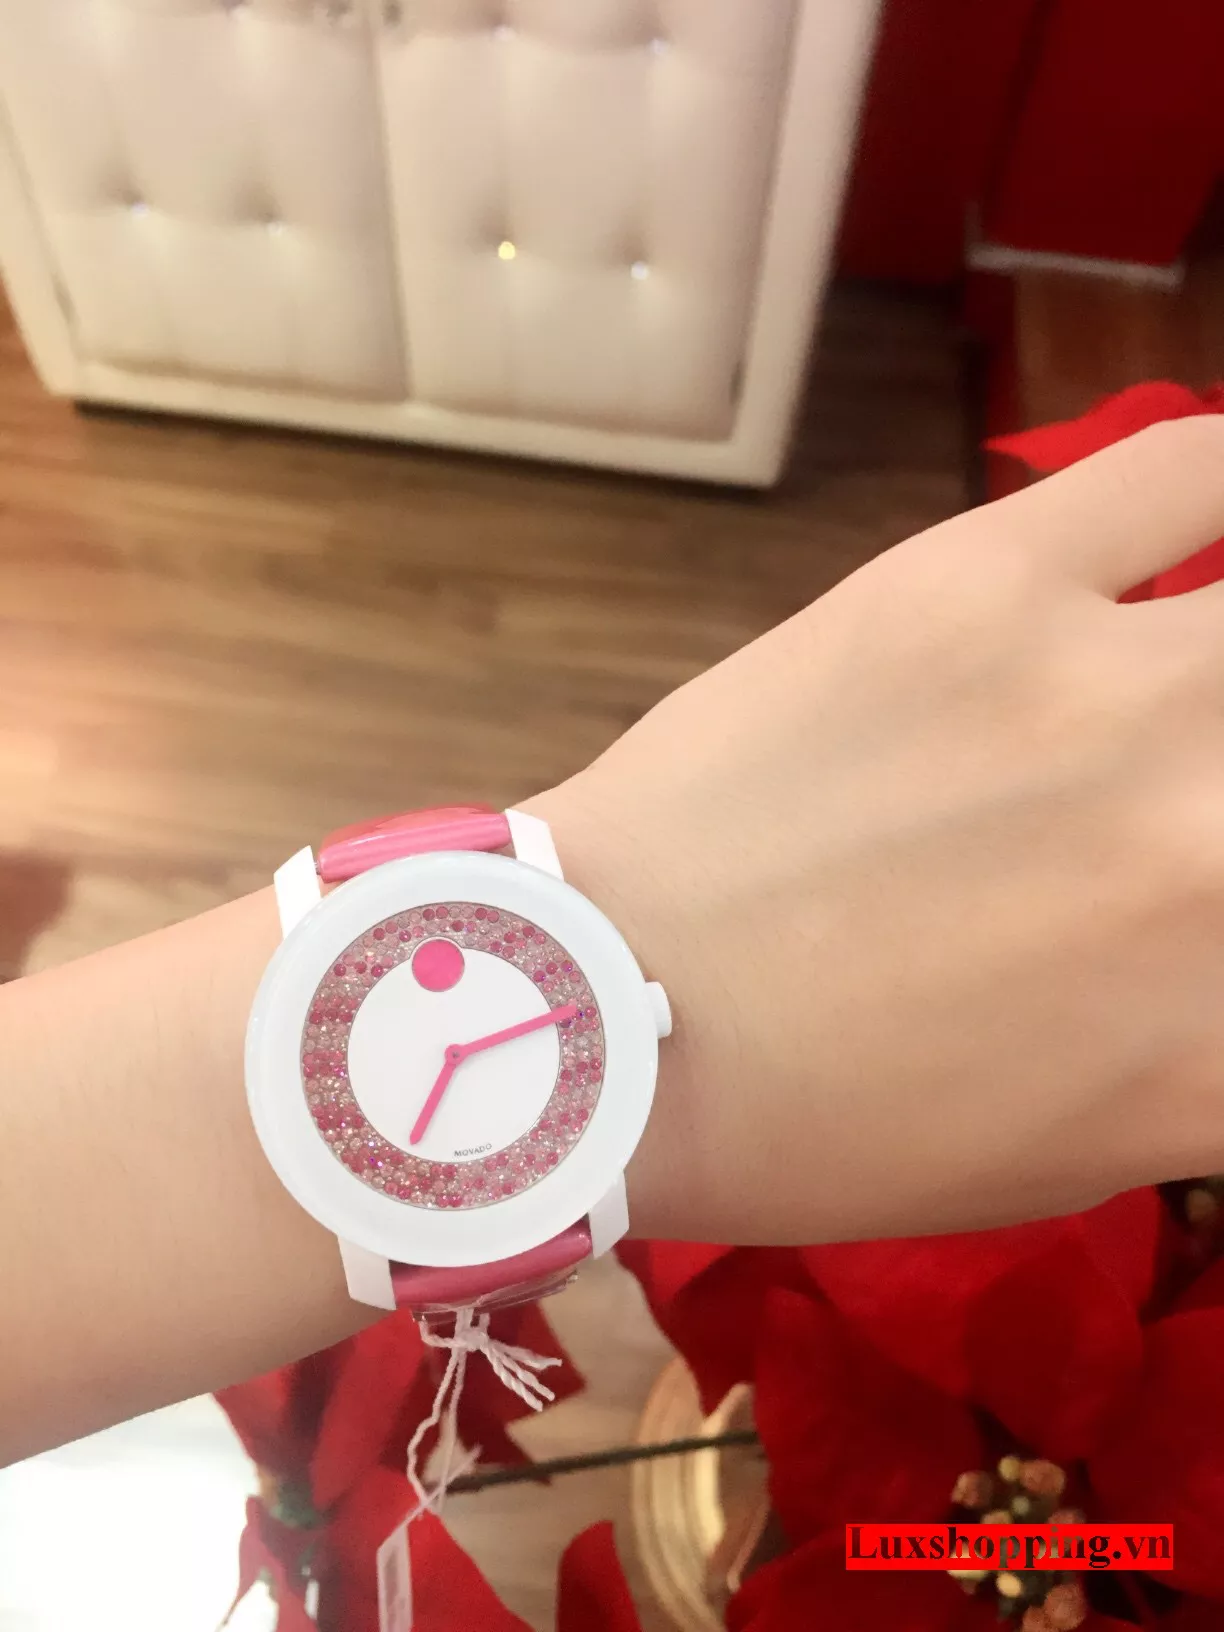 Movado Bold Swiss Pink Watch 36mm 